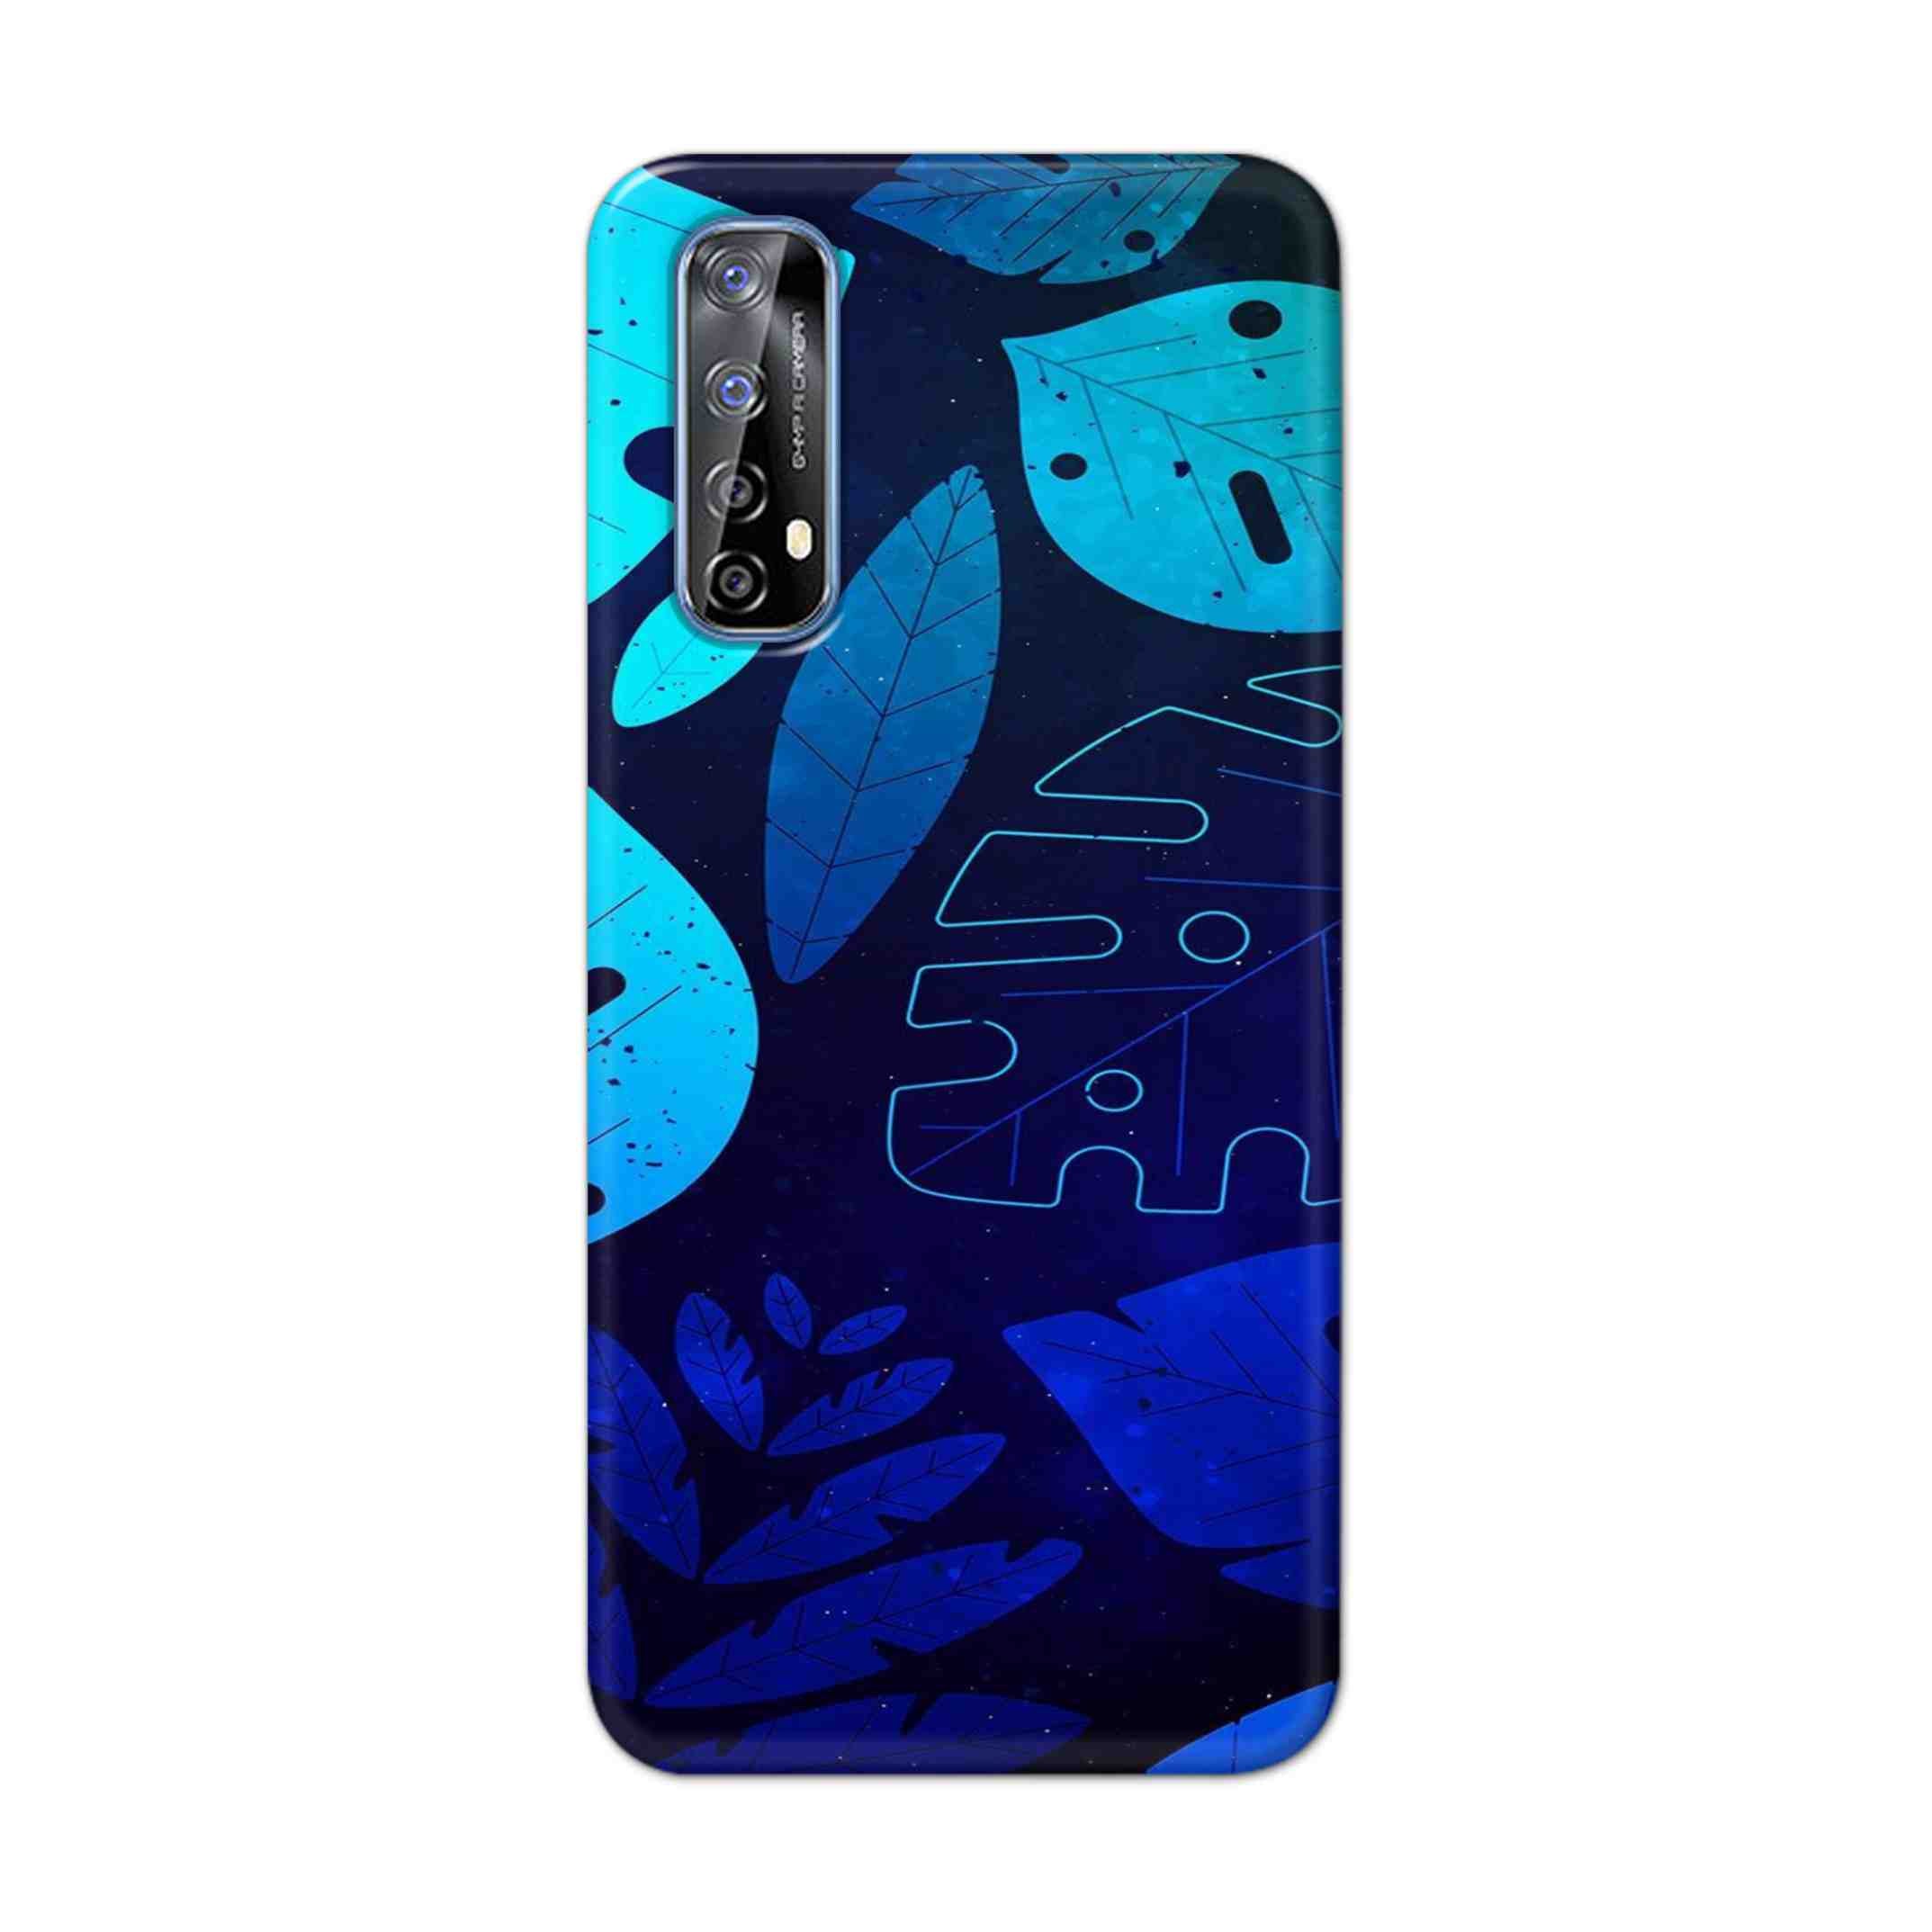 Buy Neon Leaf Hard Back Mobile Phone Case Cover For Realme 7 Online